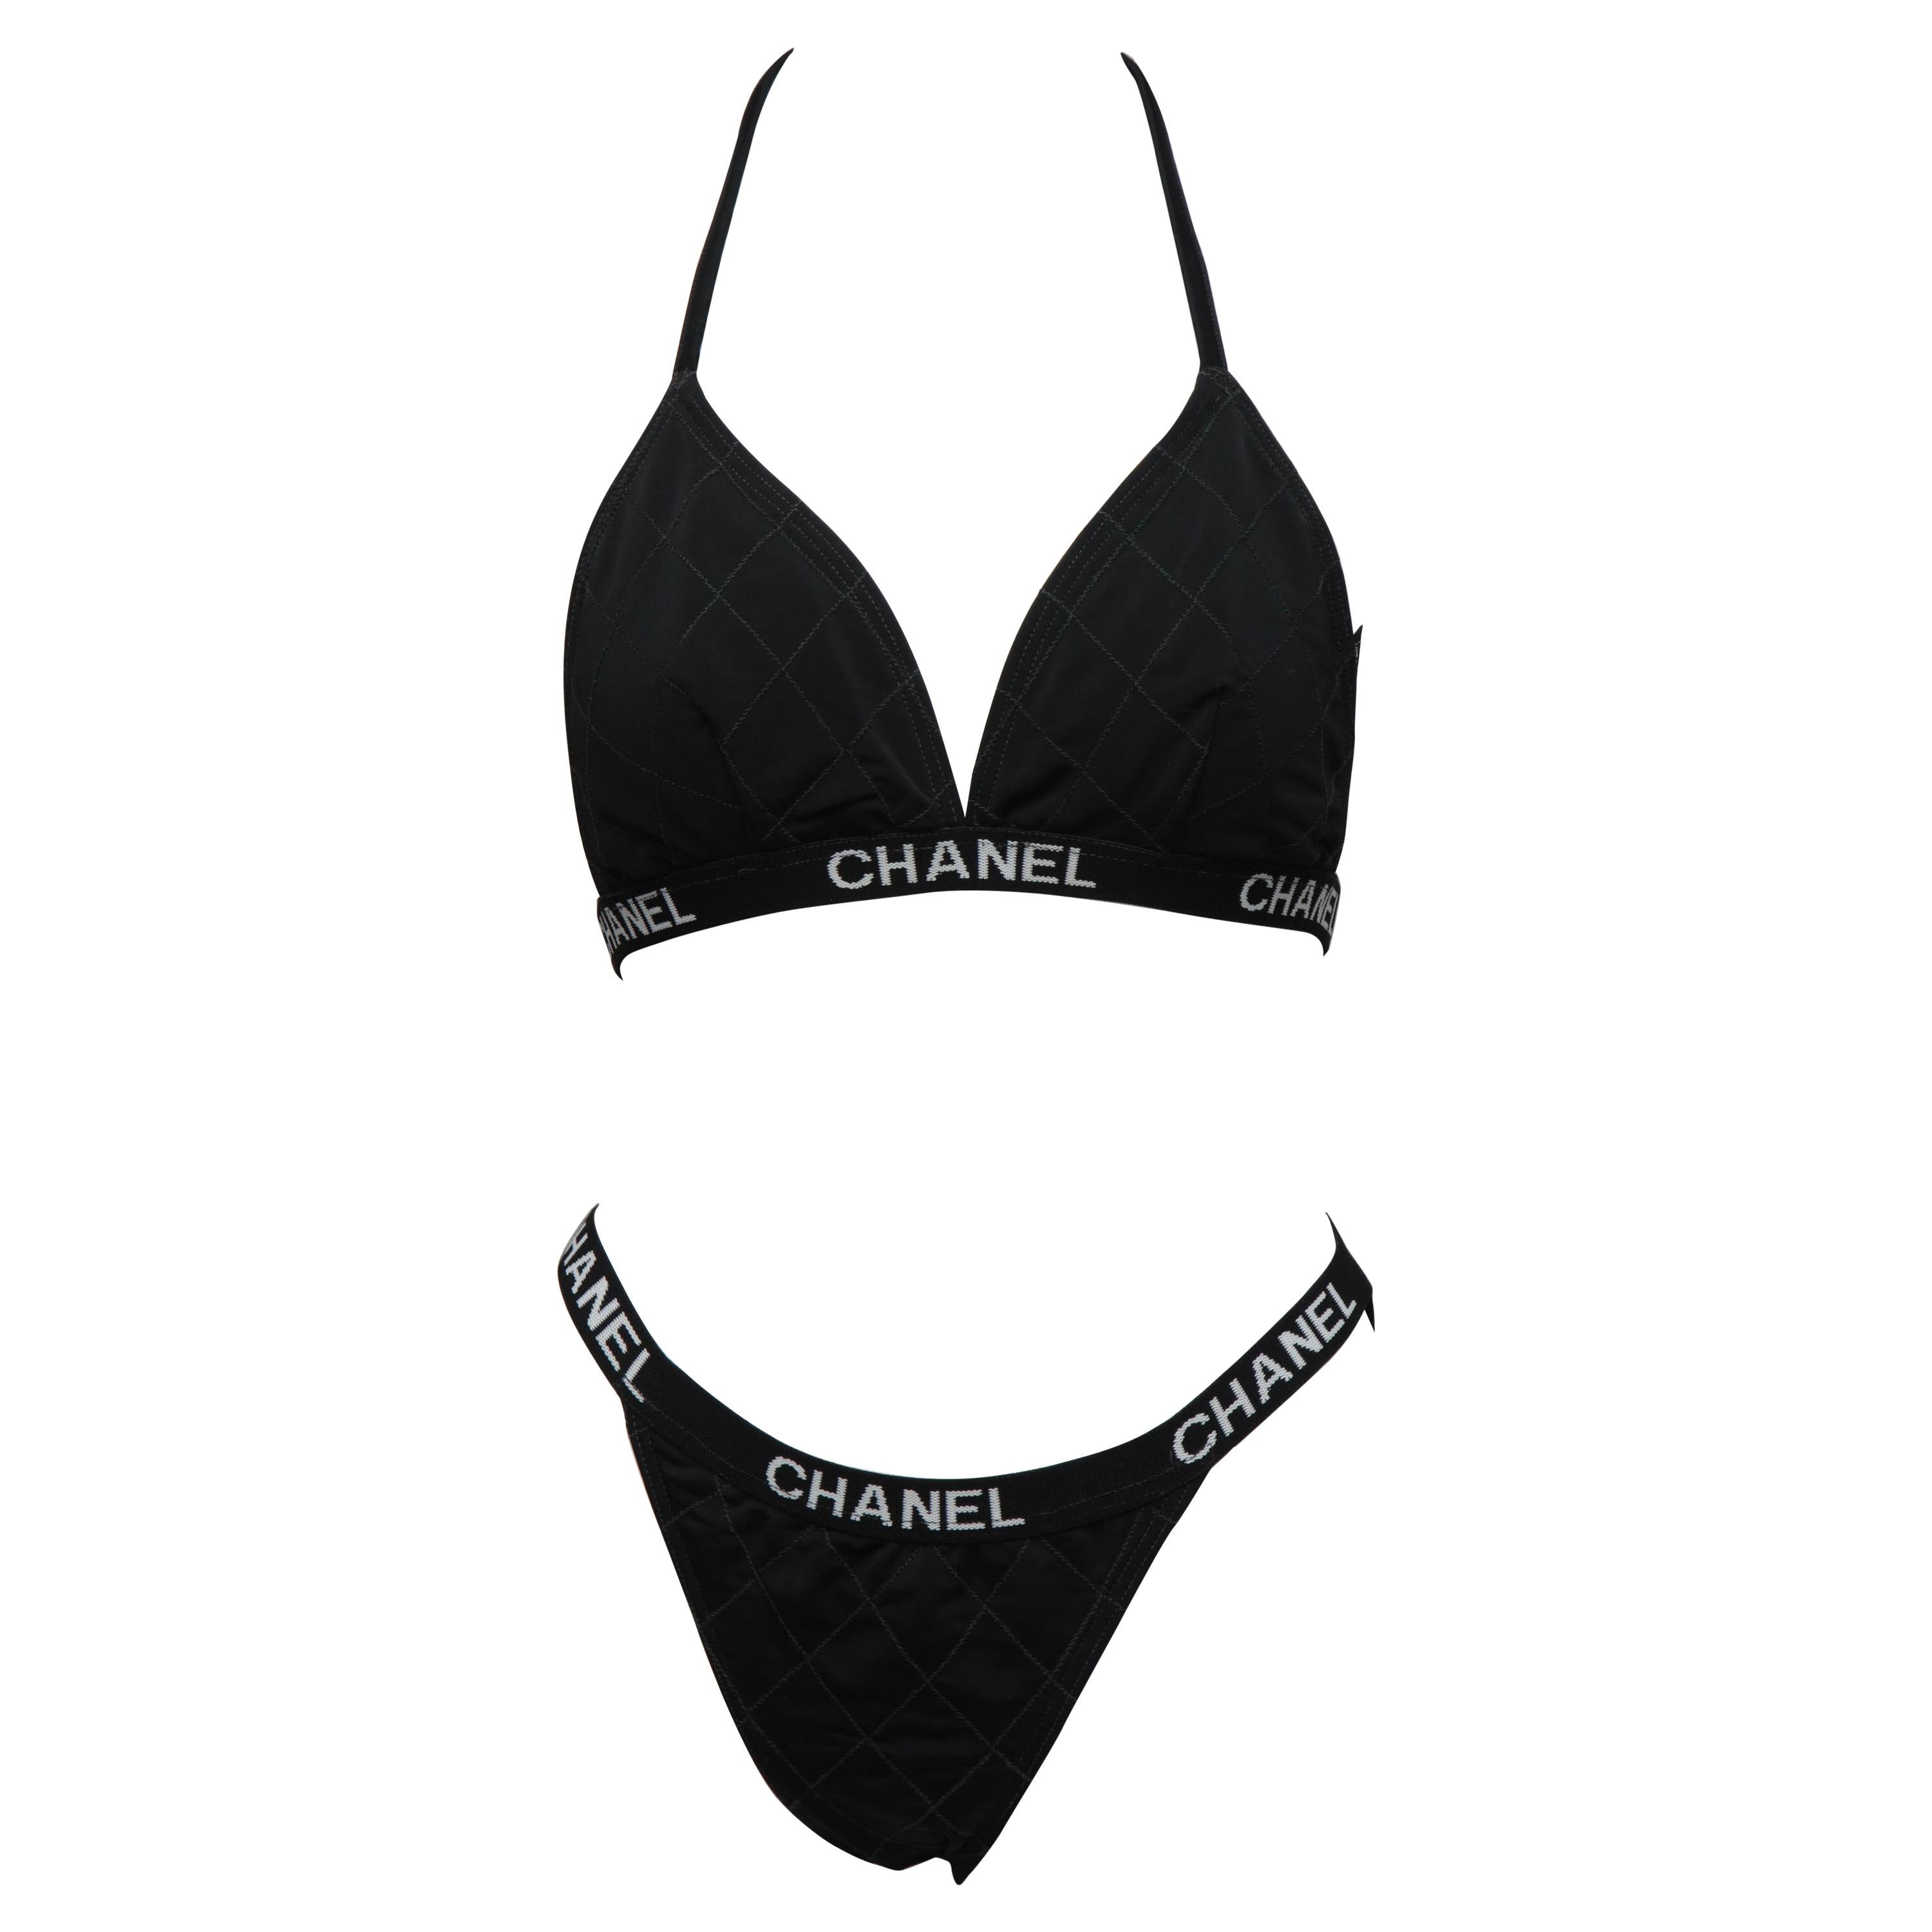 Chanel black bikini